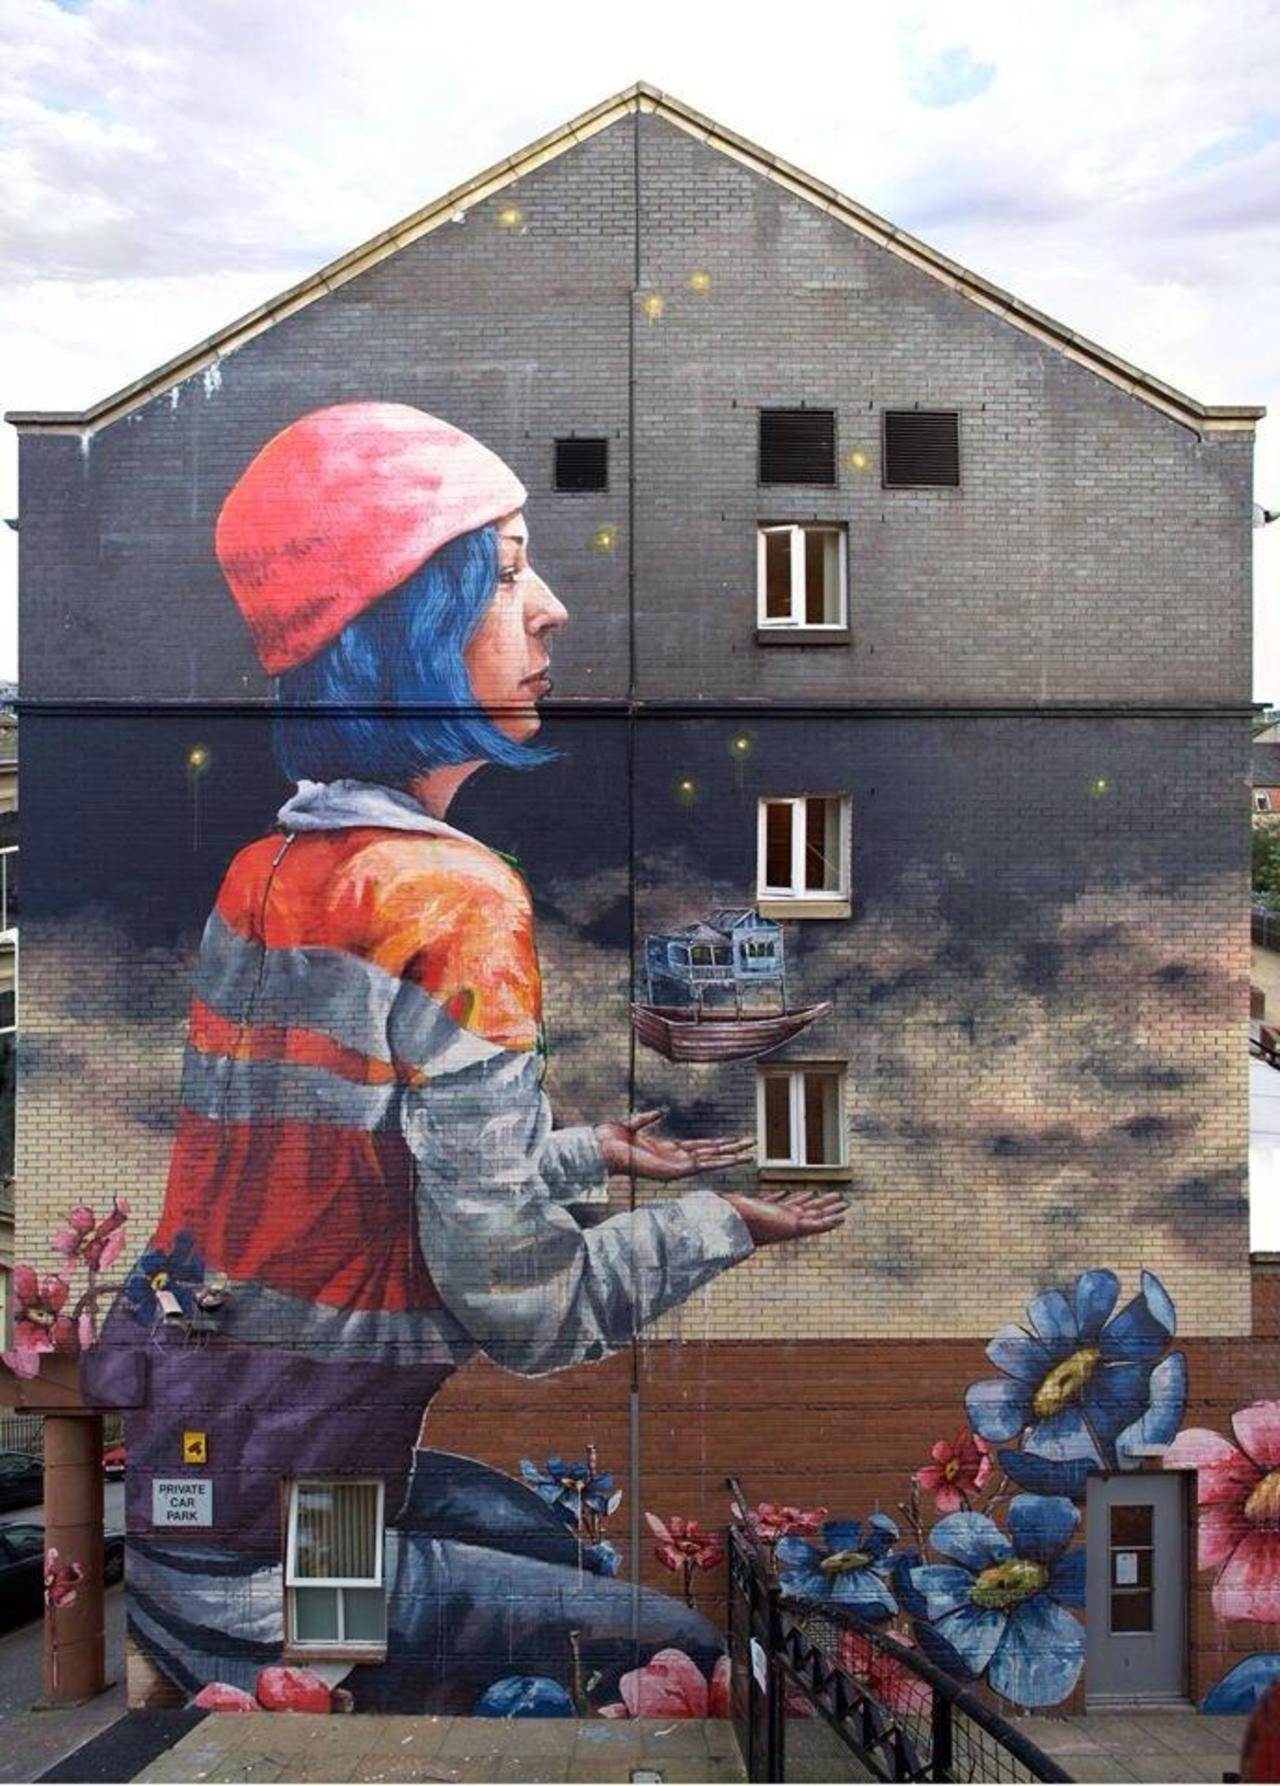 Artist Fintan McGee new wonderful Street Art mural in Glasgow, Scotland #art #mural #graffiti #streetart https://t.co/Vh0JYkqLRC